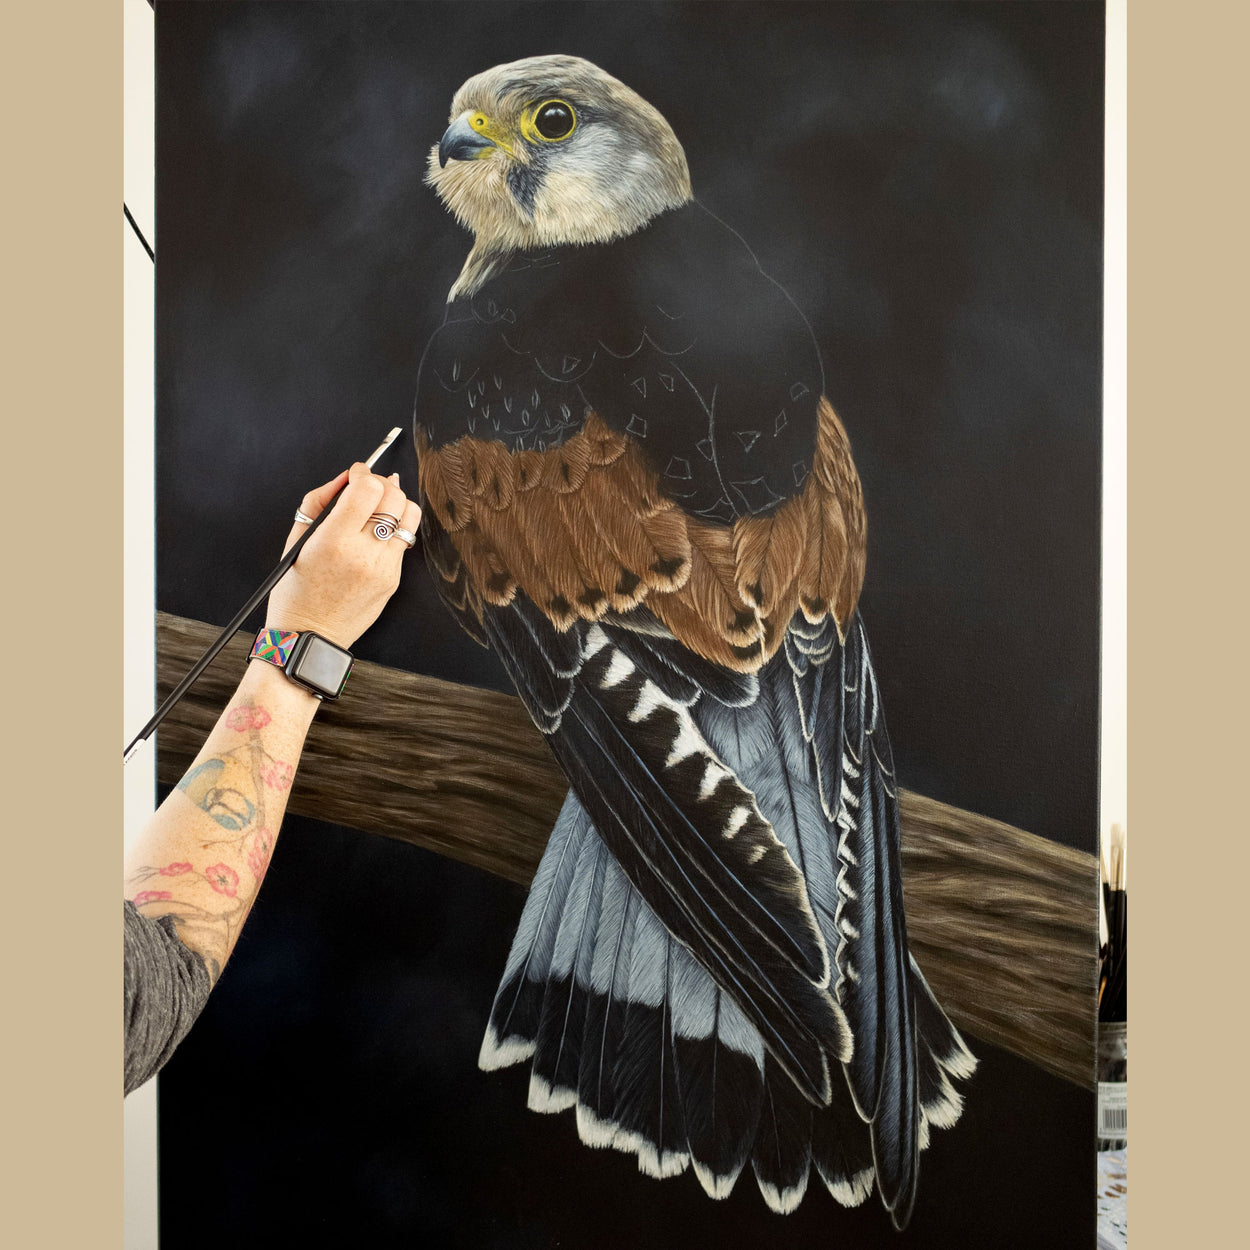 Common Kestrel Acrylic Painting in Progress - Bird Art by Jill Dimond